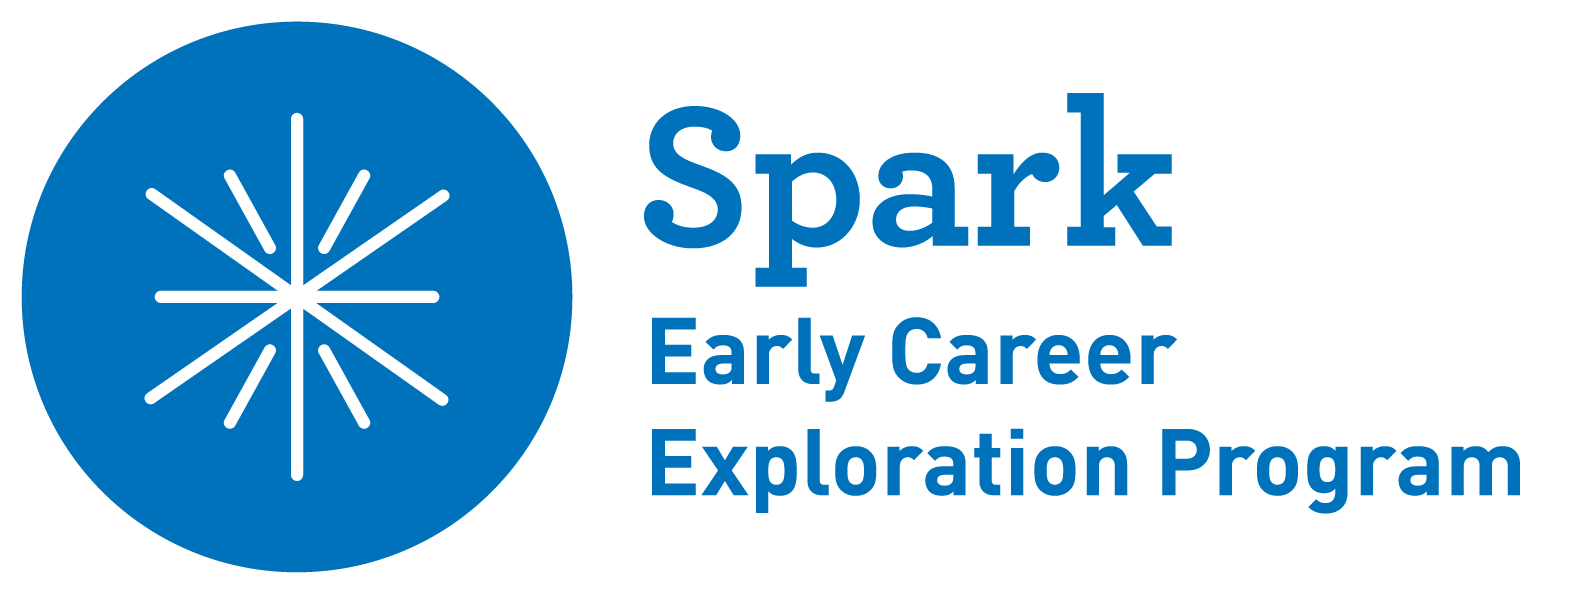 Spark Early Career Exploration Program